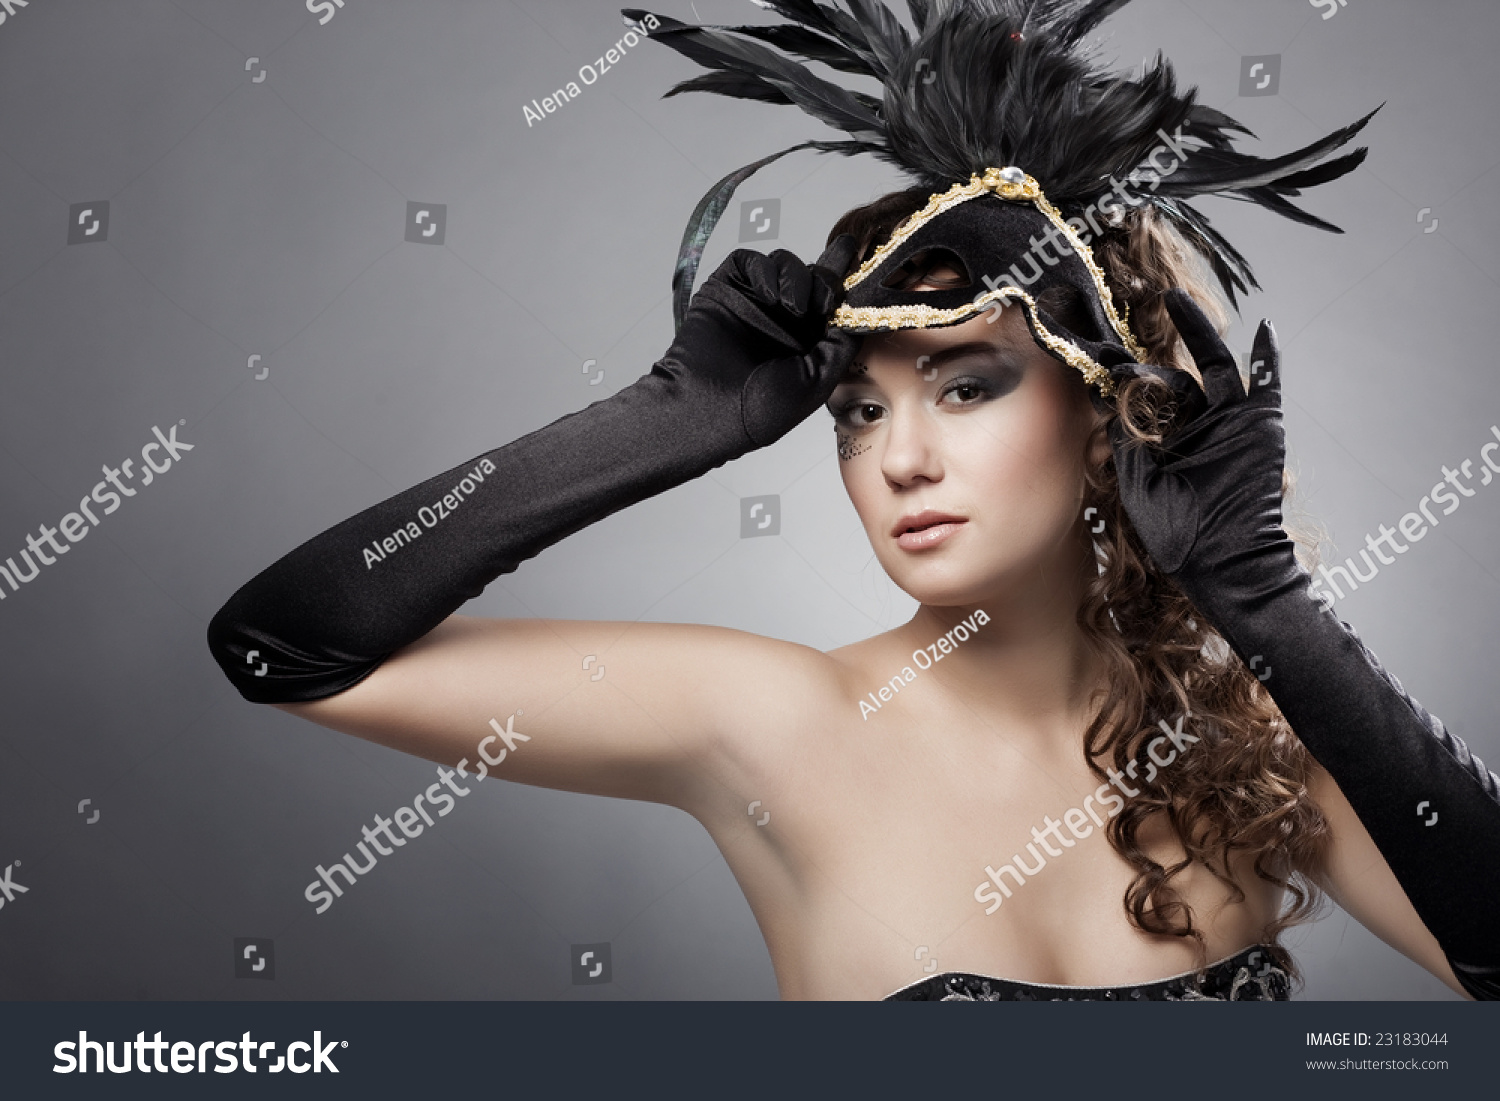 Beautiful Woman Wearing Masquerade Costume And Mask Stock